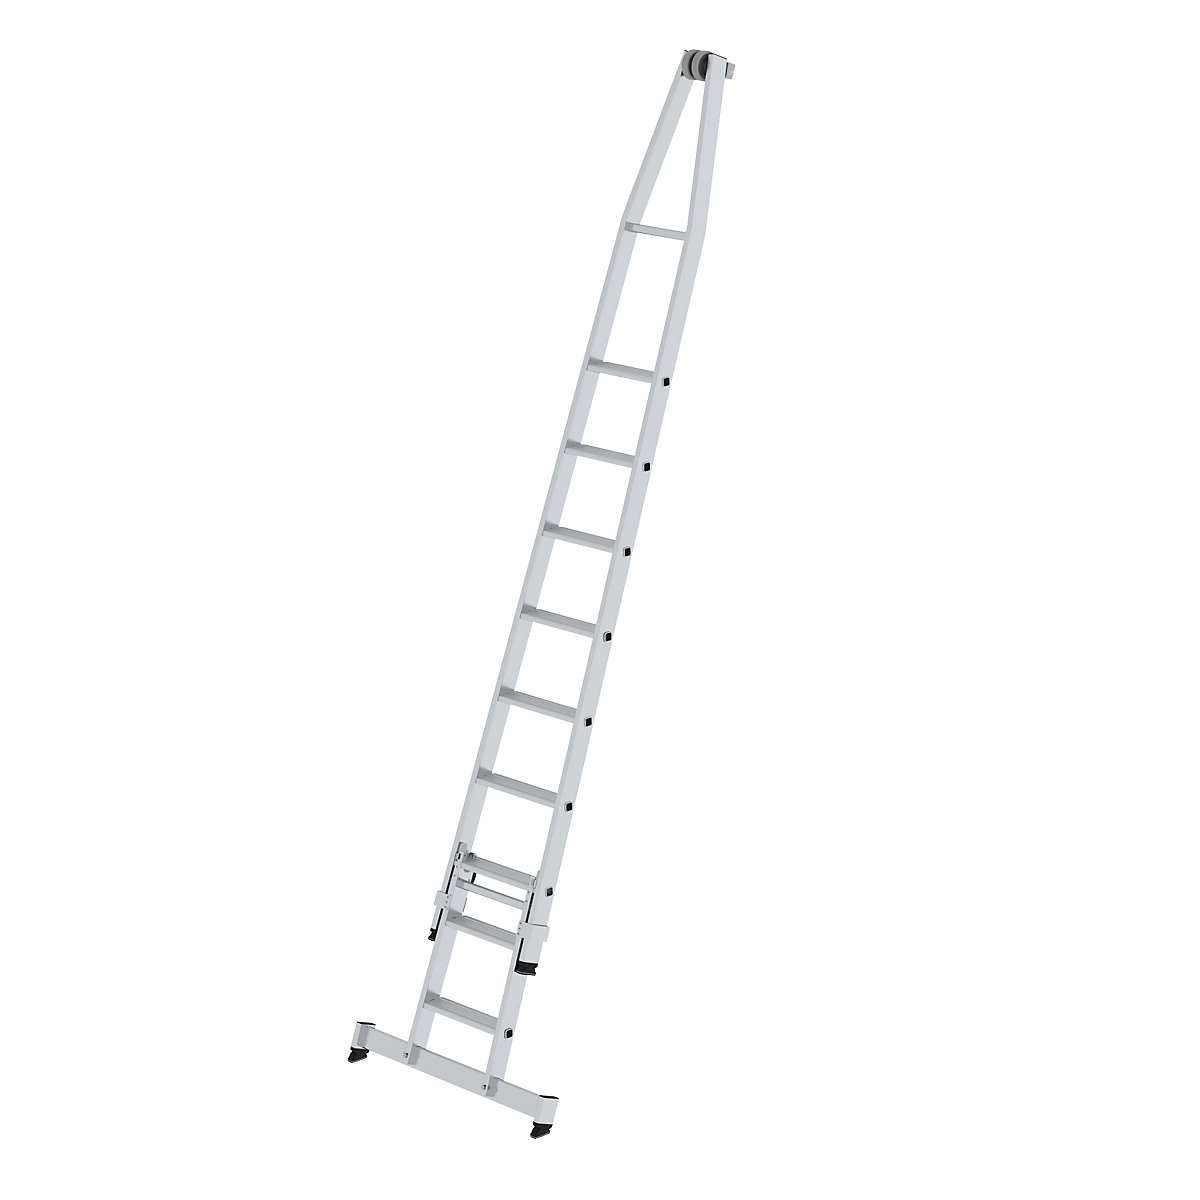 Glass cleaner step ladder - MUNK